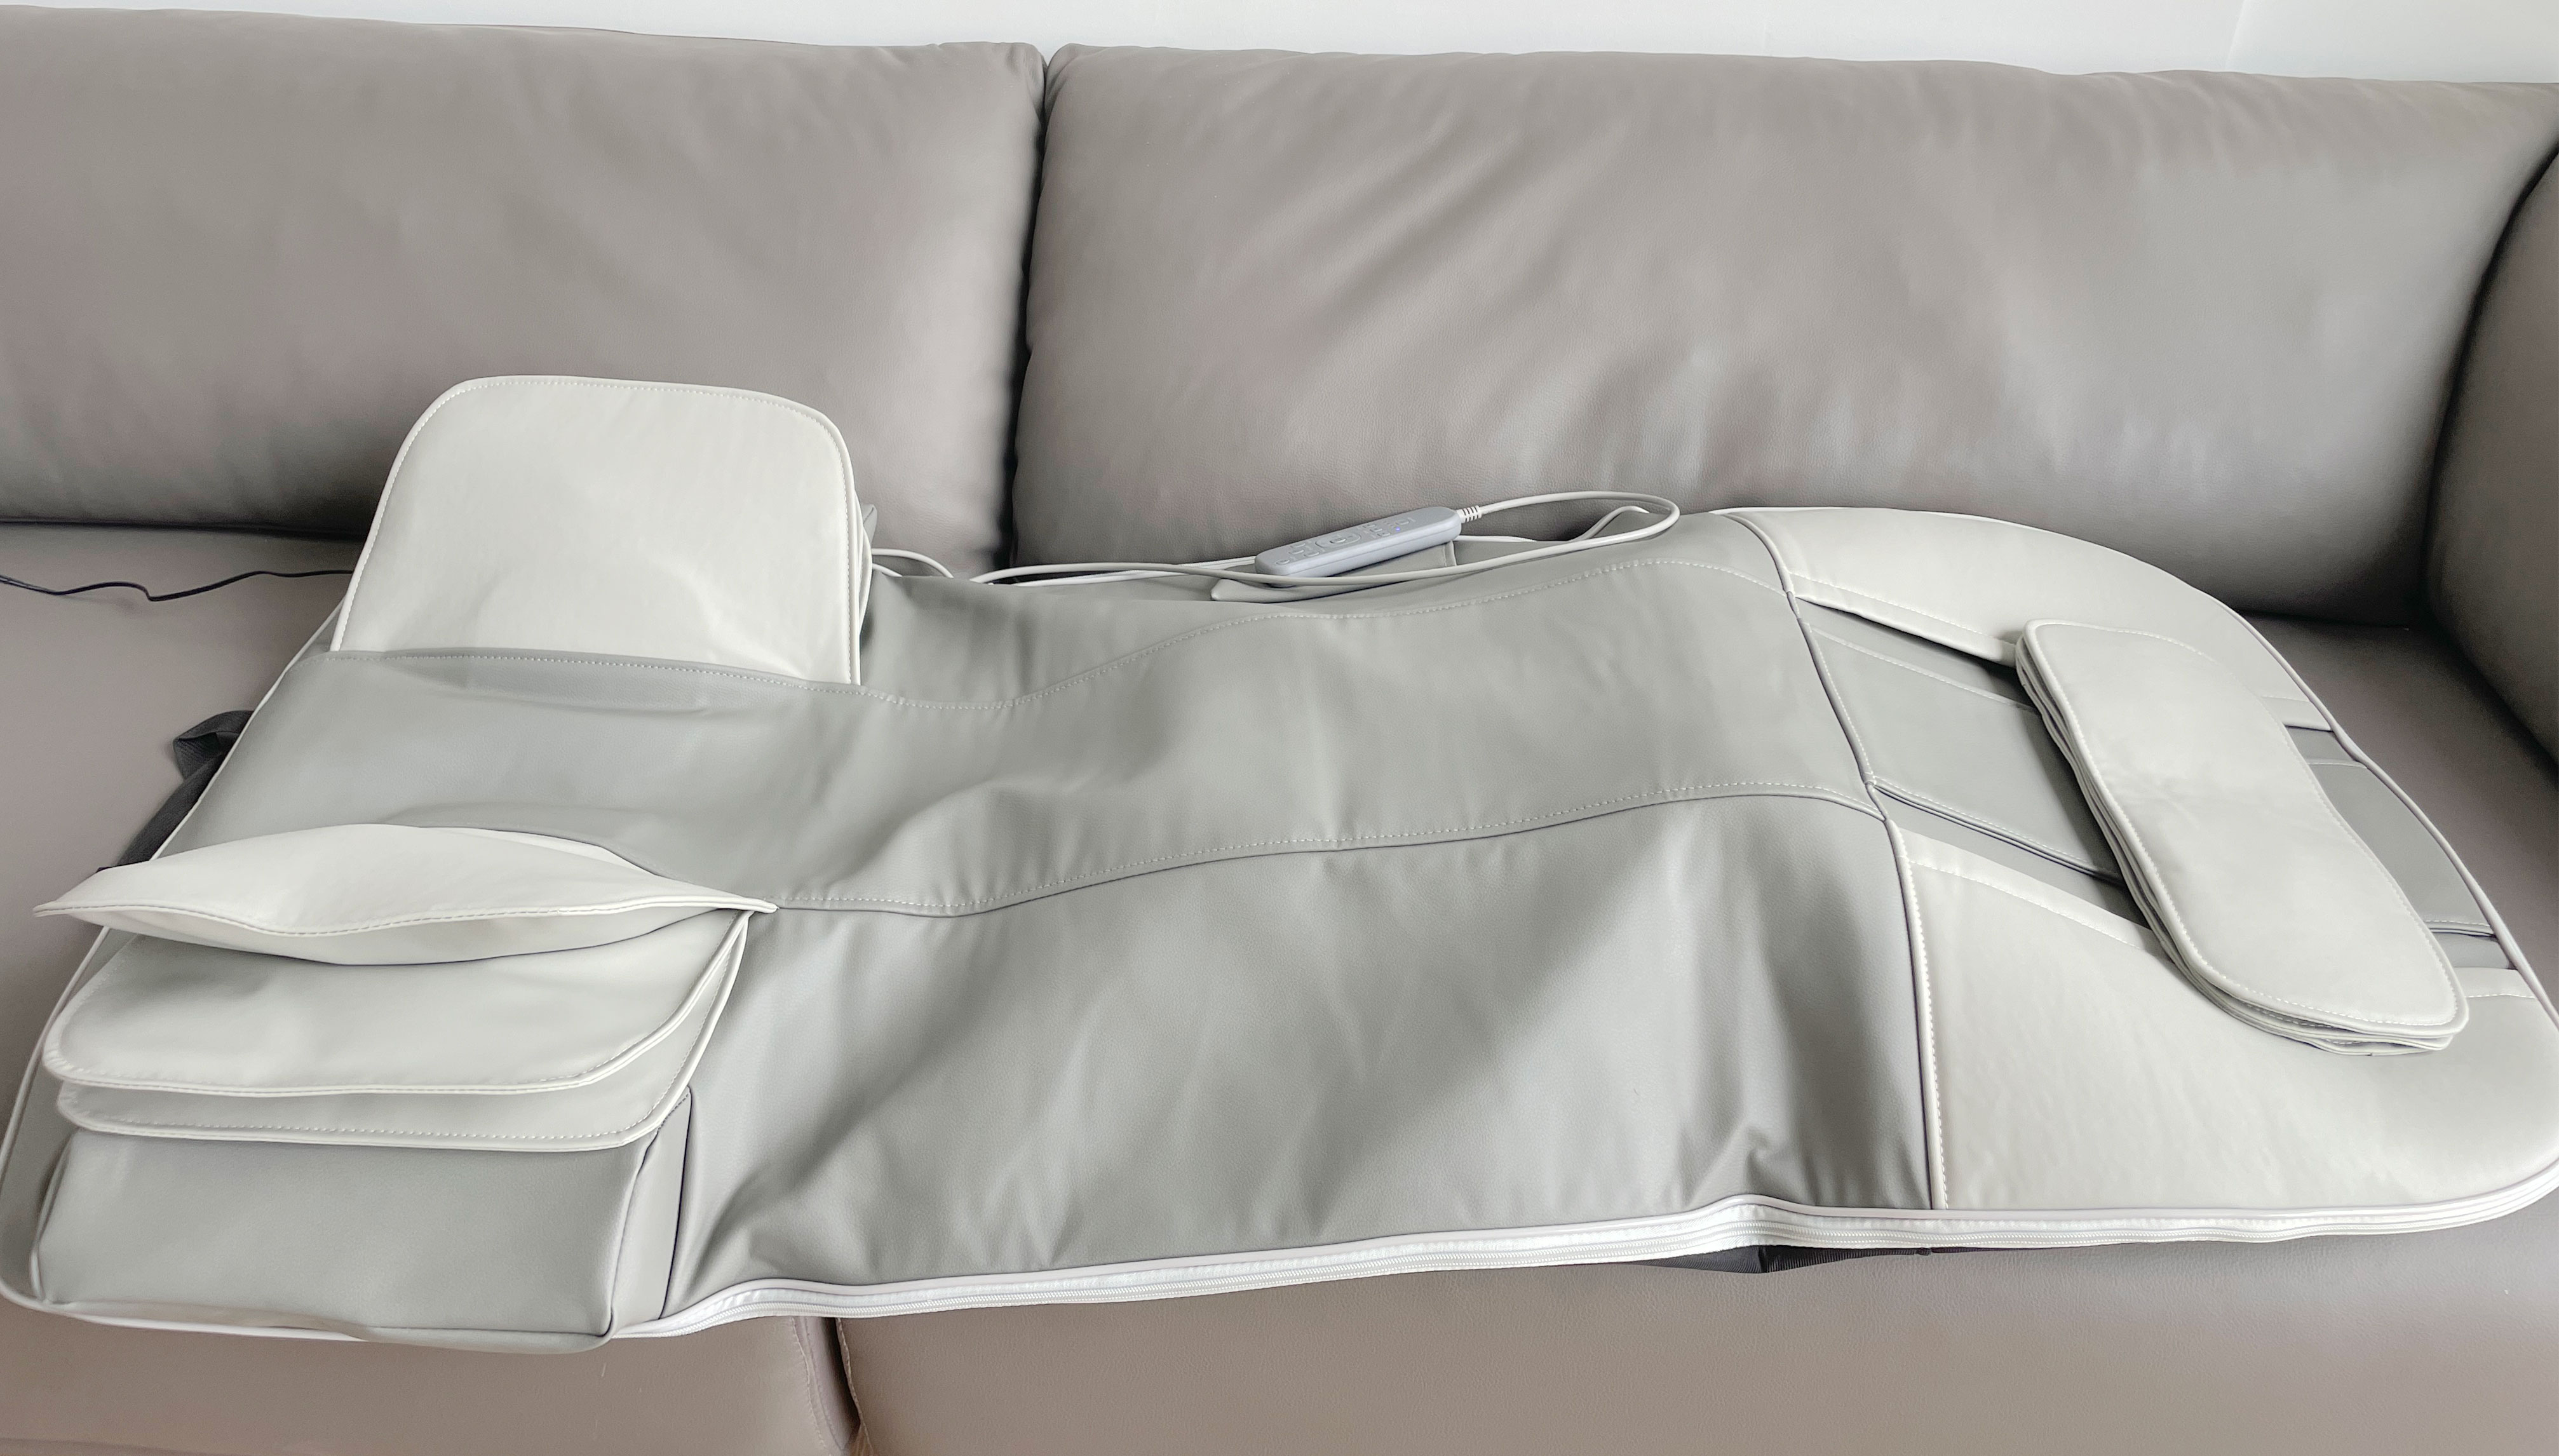 ZMIND C014 heated mattress bed for massage portable kneading massage mattress suppliers electric airbag mattress massage